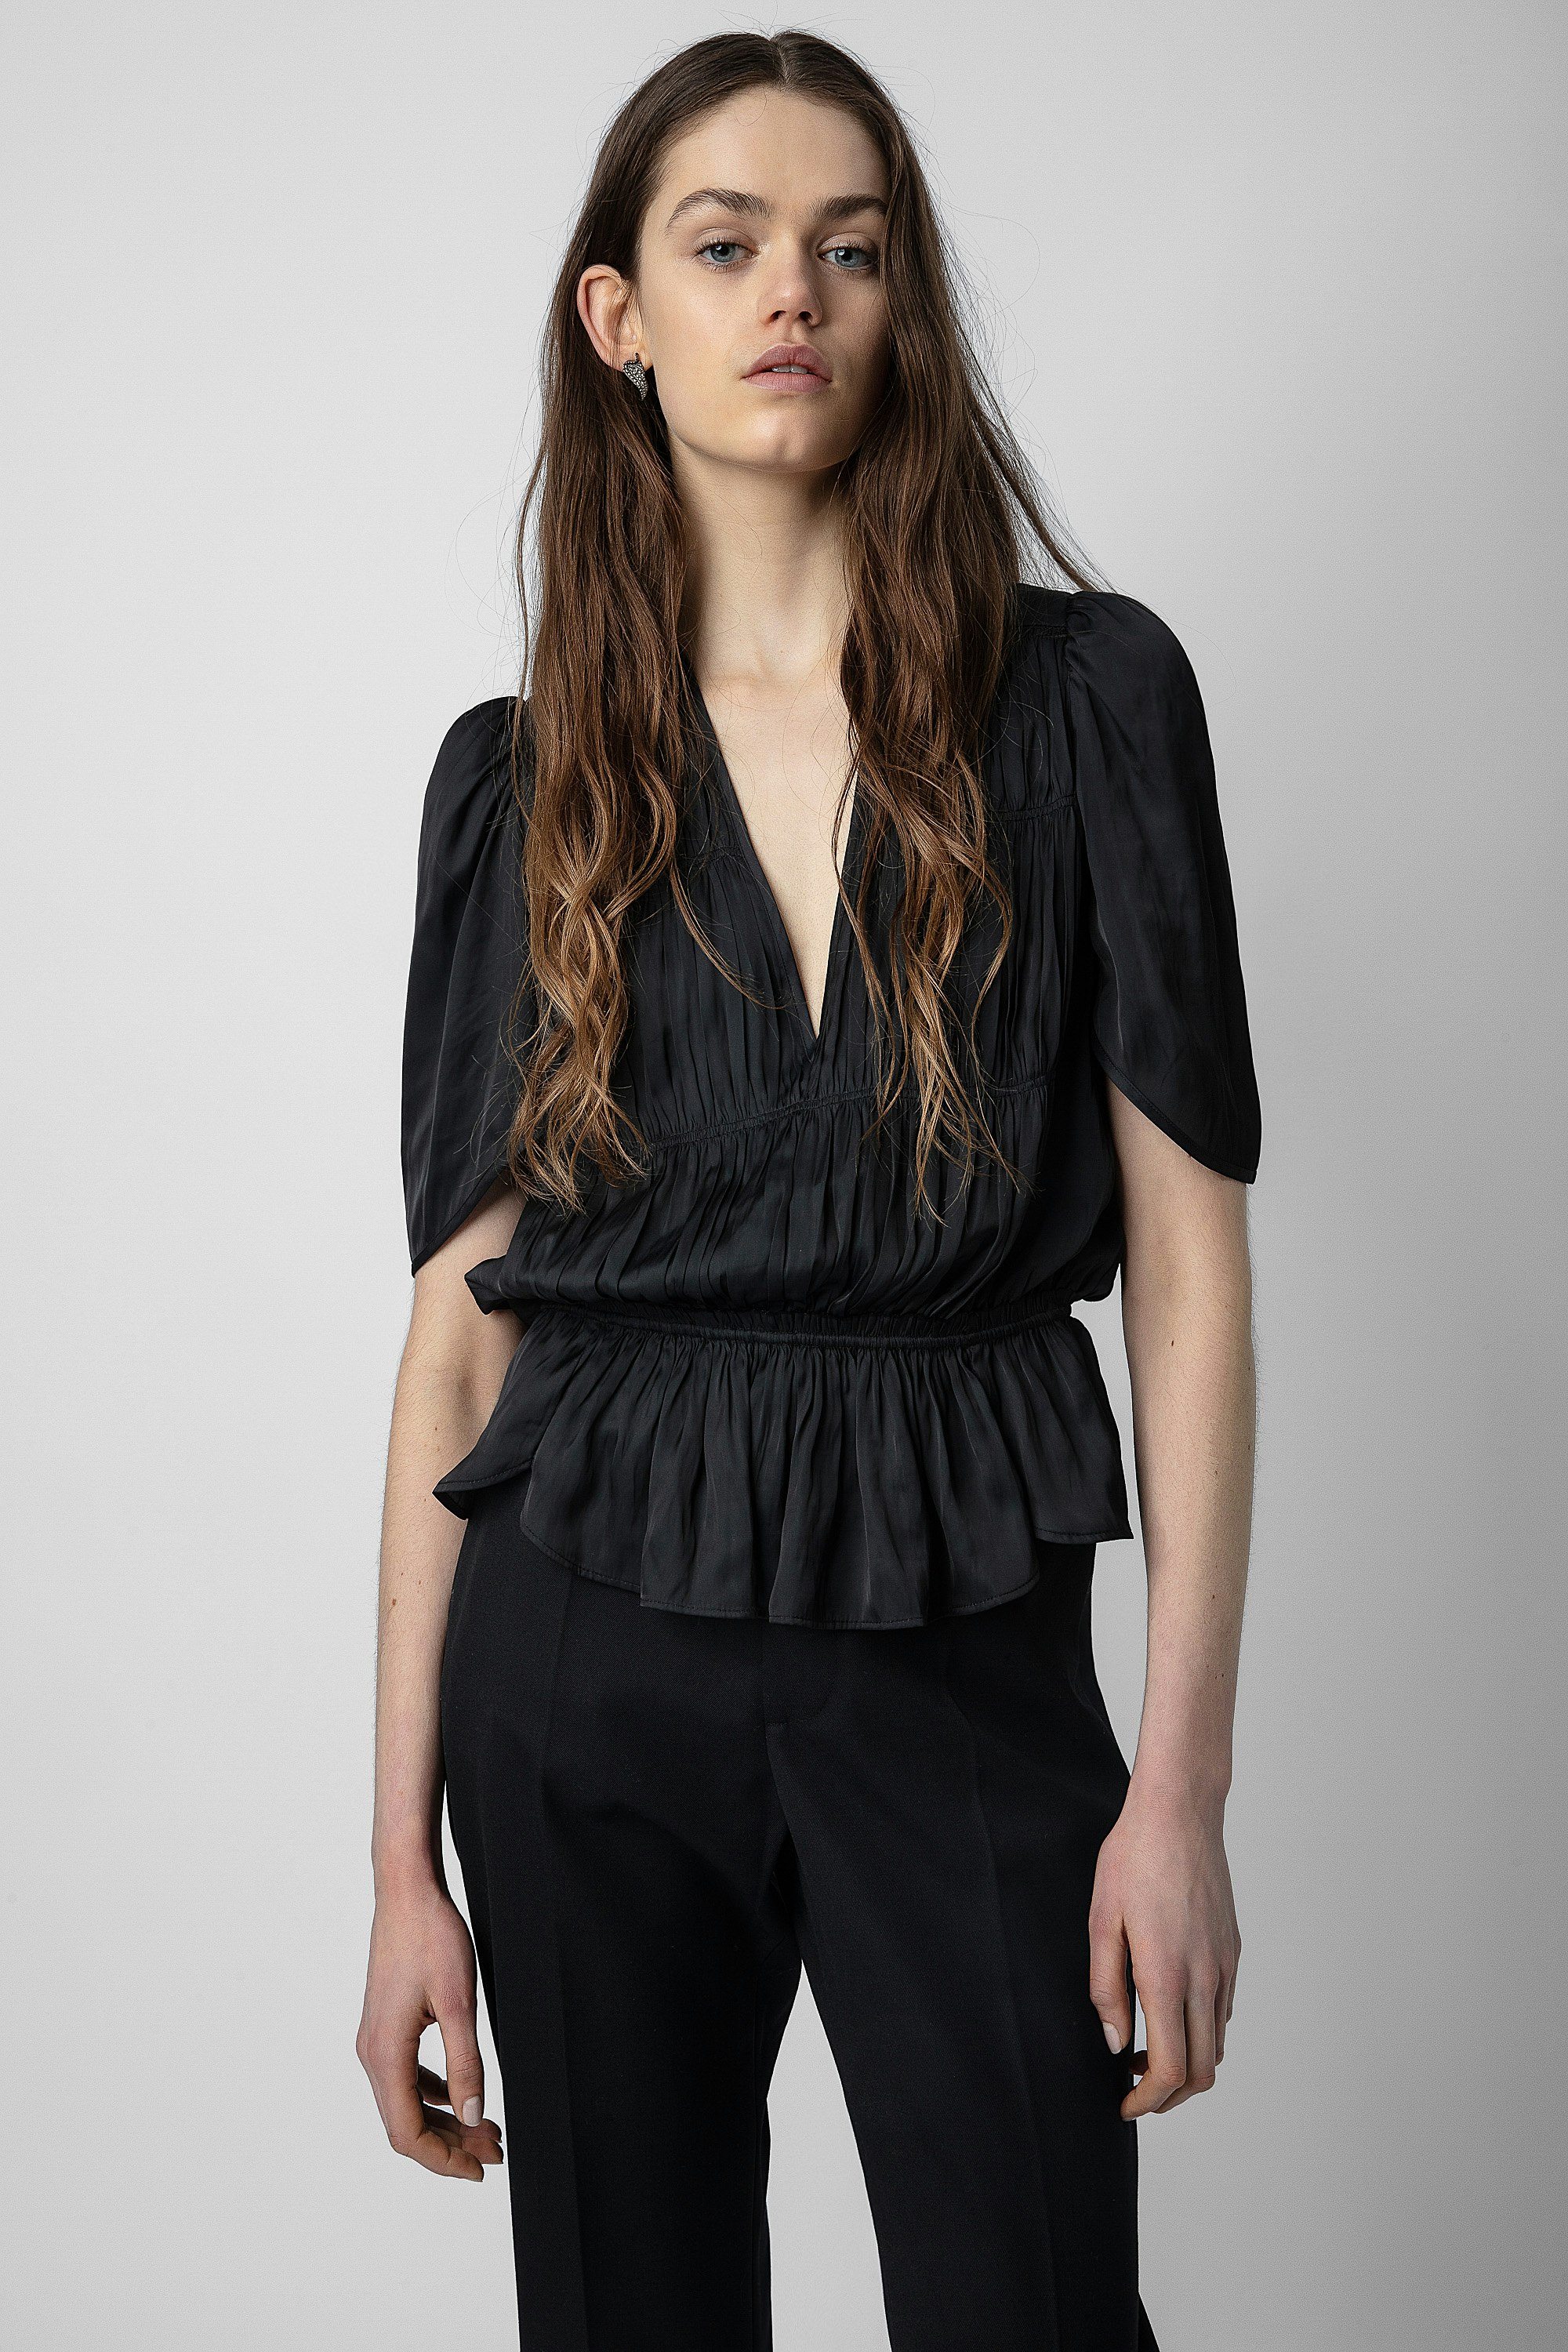 Tyoko Satin Top - Women's gathered black satin top with asymmetrical sleeves